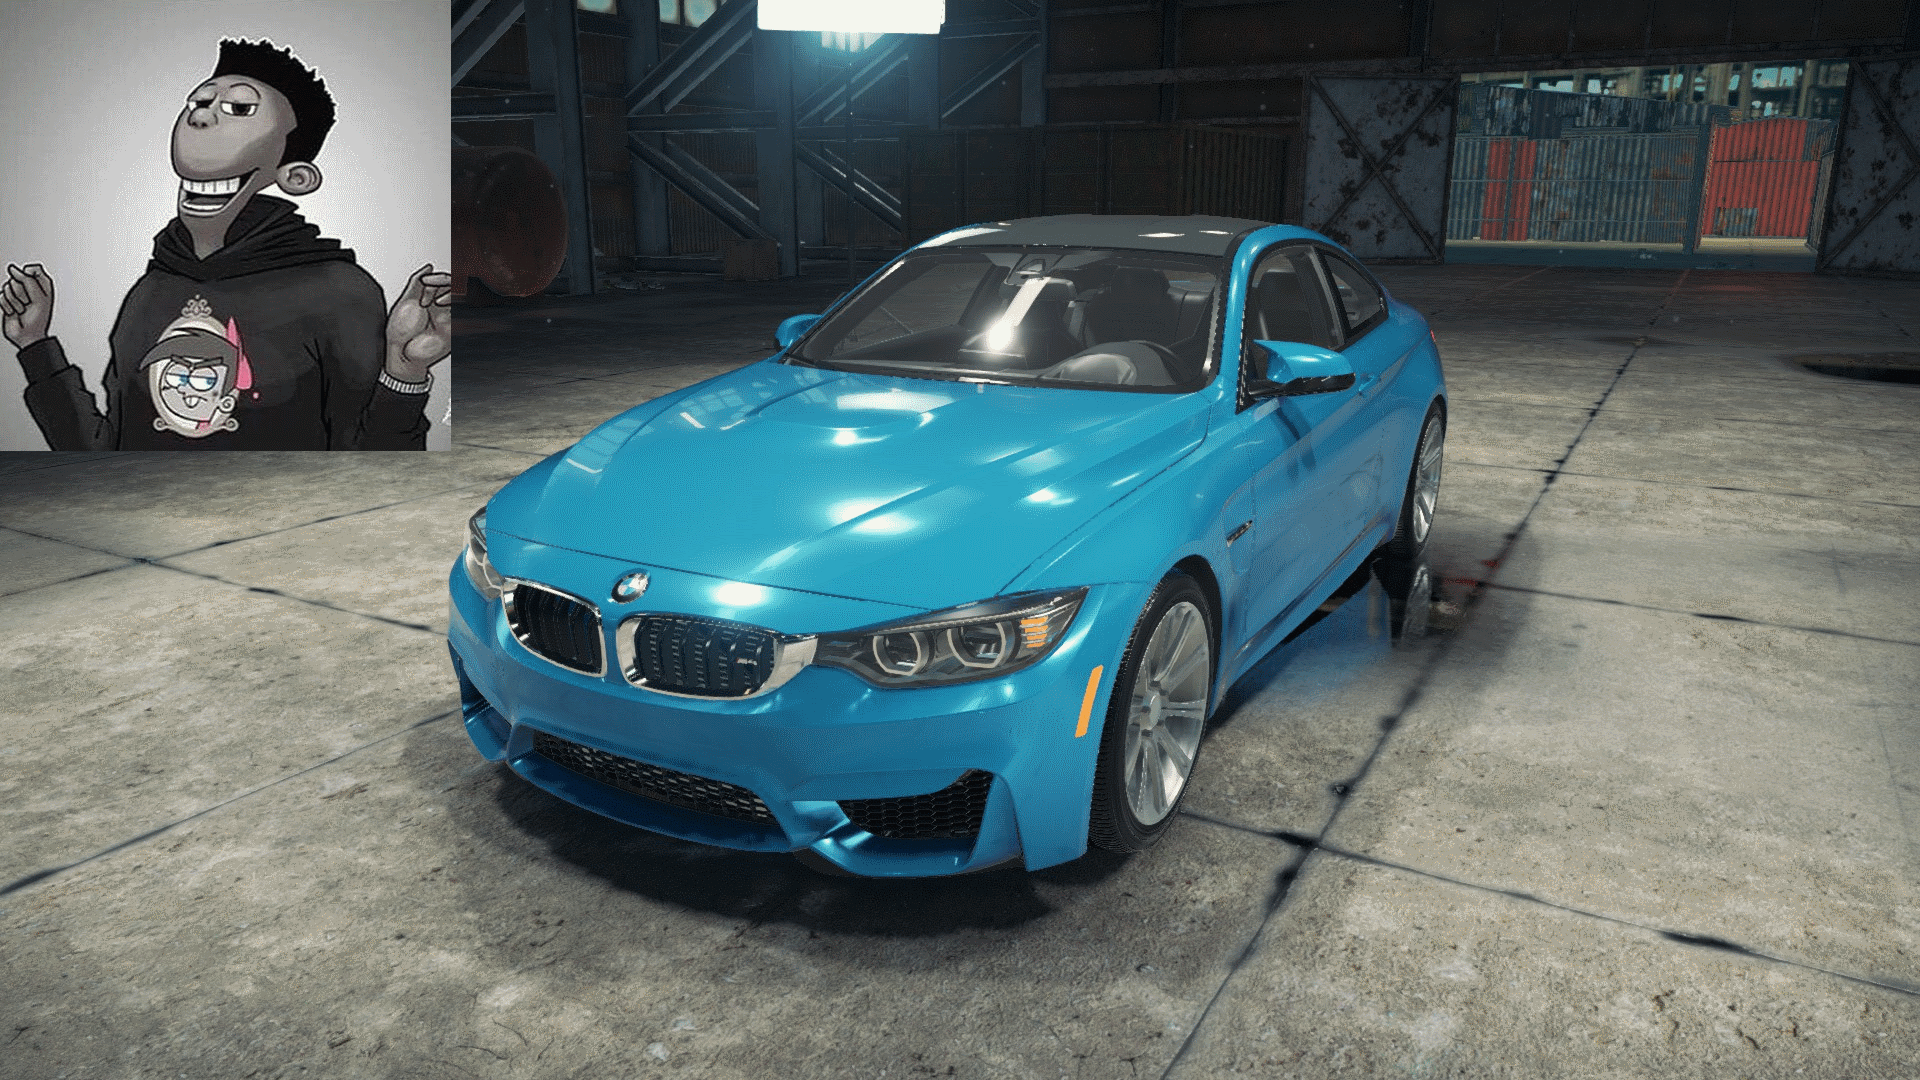 Car Mechanic Simulator BMW e34. Car Mechanic Simulator 2018 BMW. Car Mechanic Simulator 2018 моды. БМВ car Mechanic 21. Симуляторы машин бмв